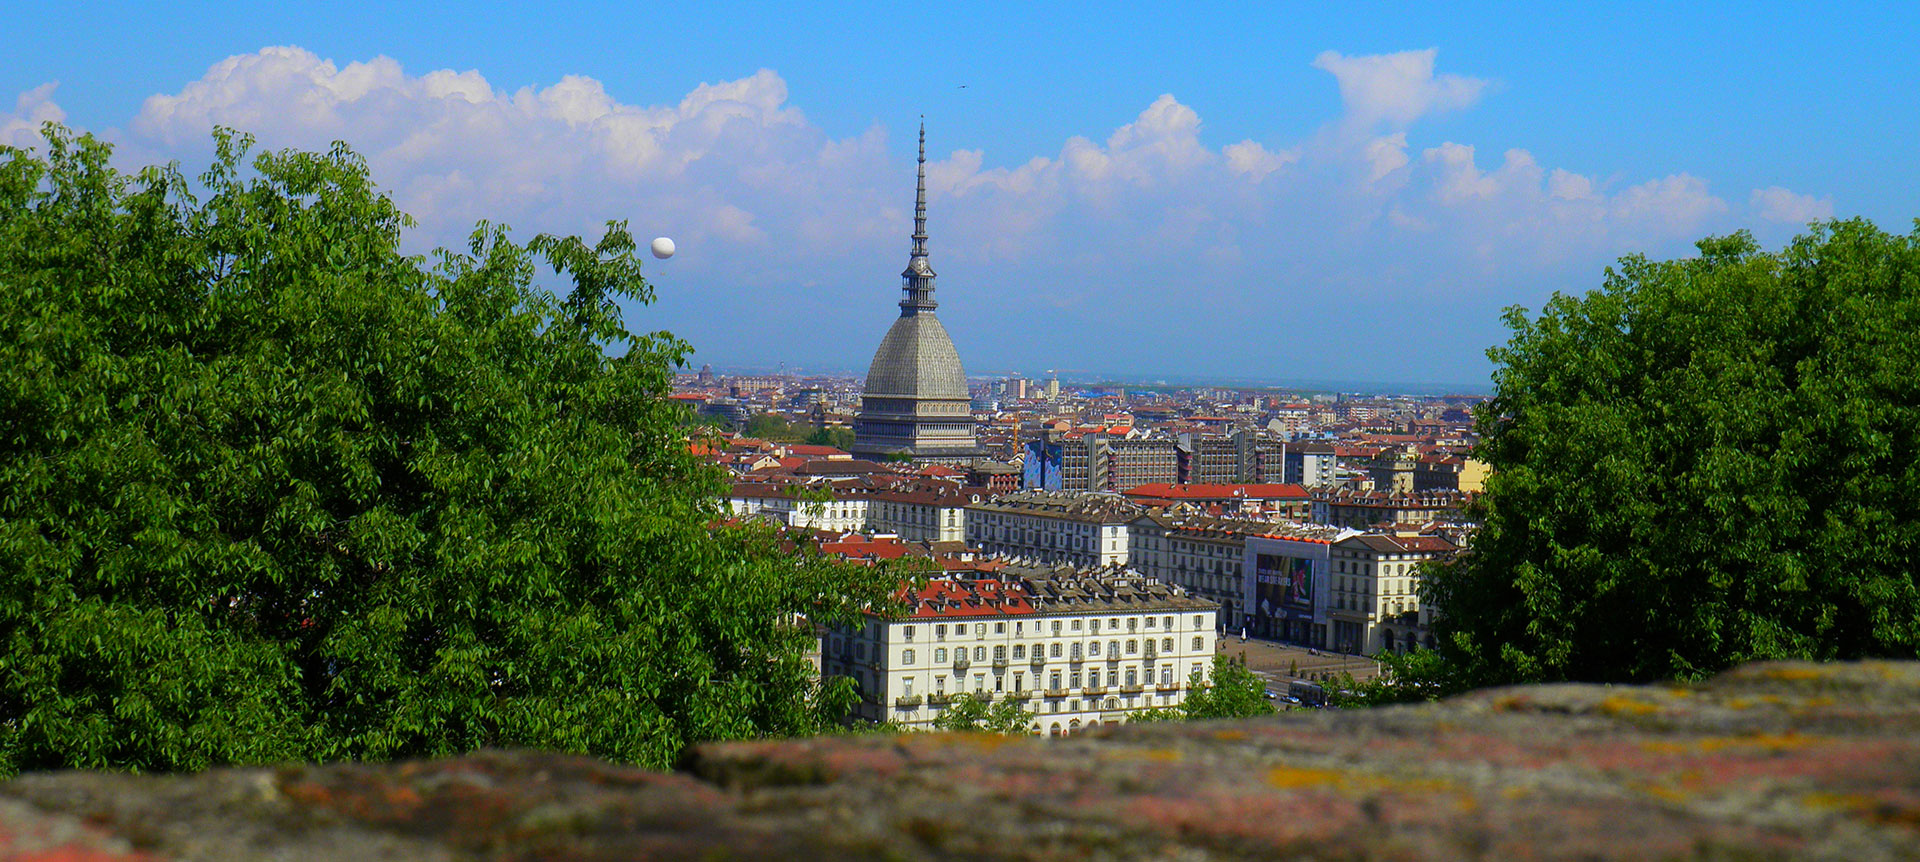 Turin panorama